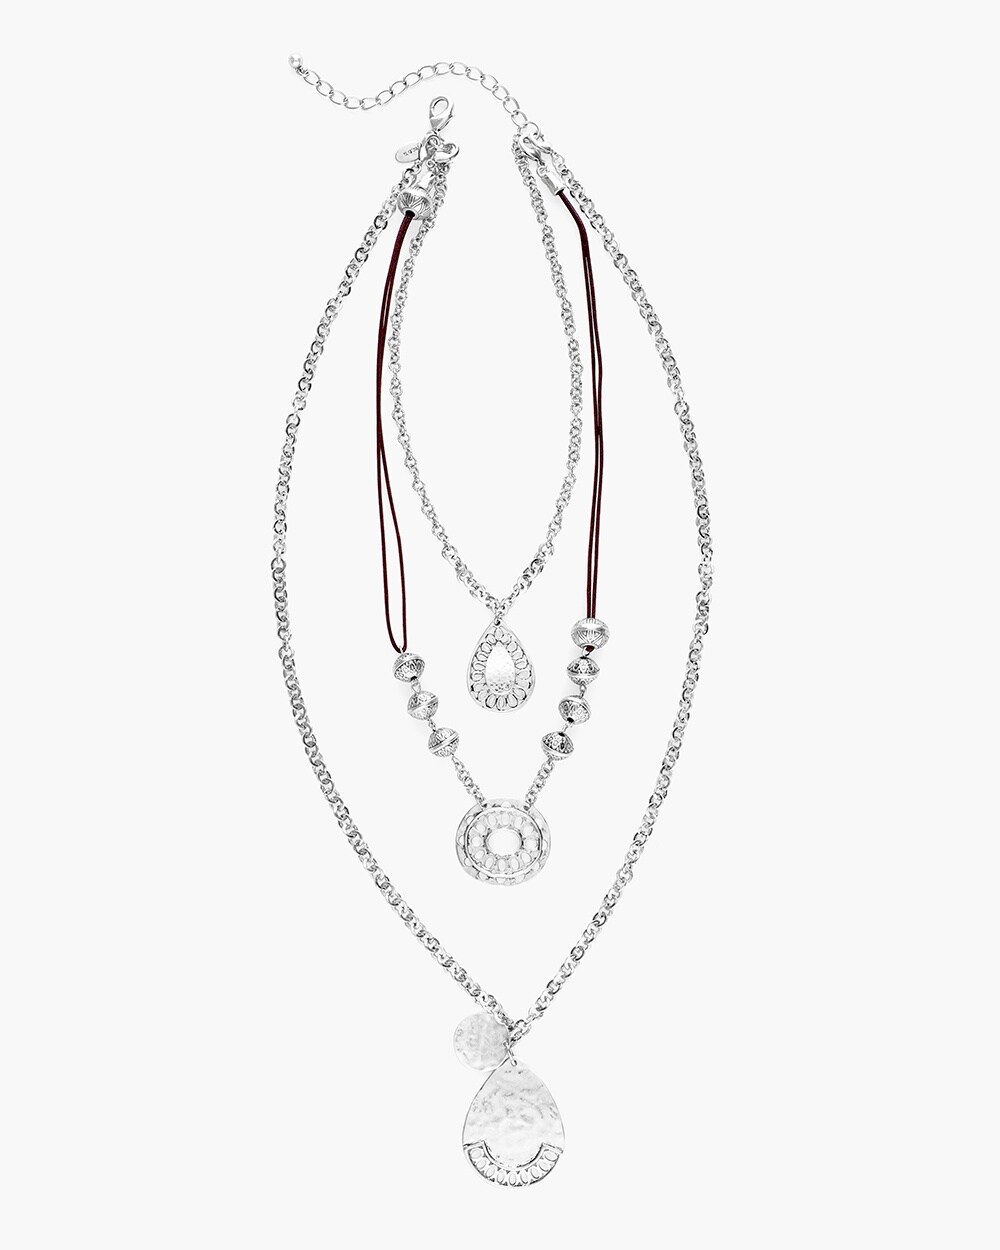 Convertible Silver-Tone Pendant Necklace